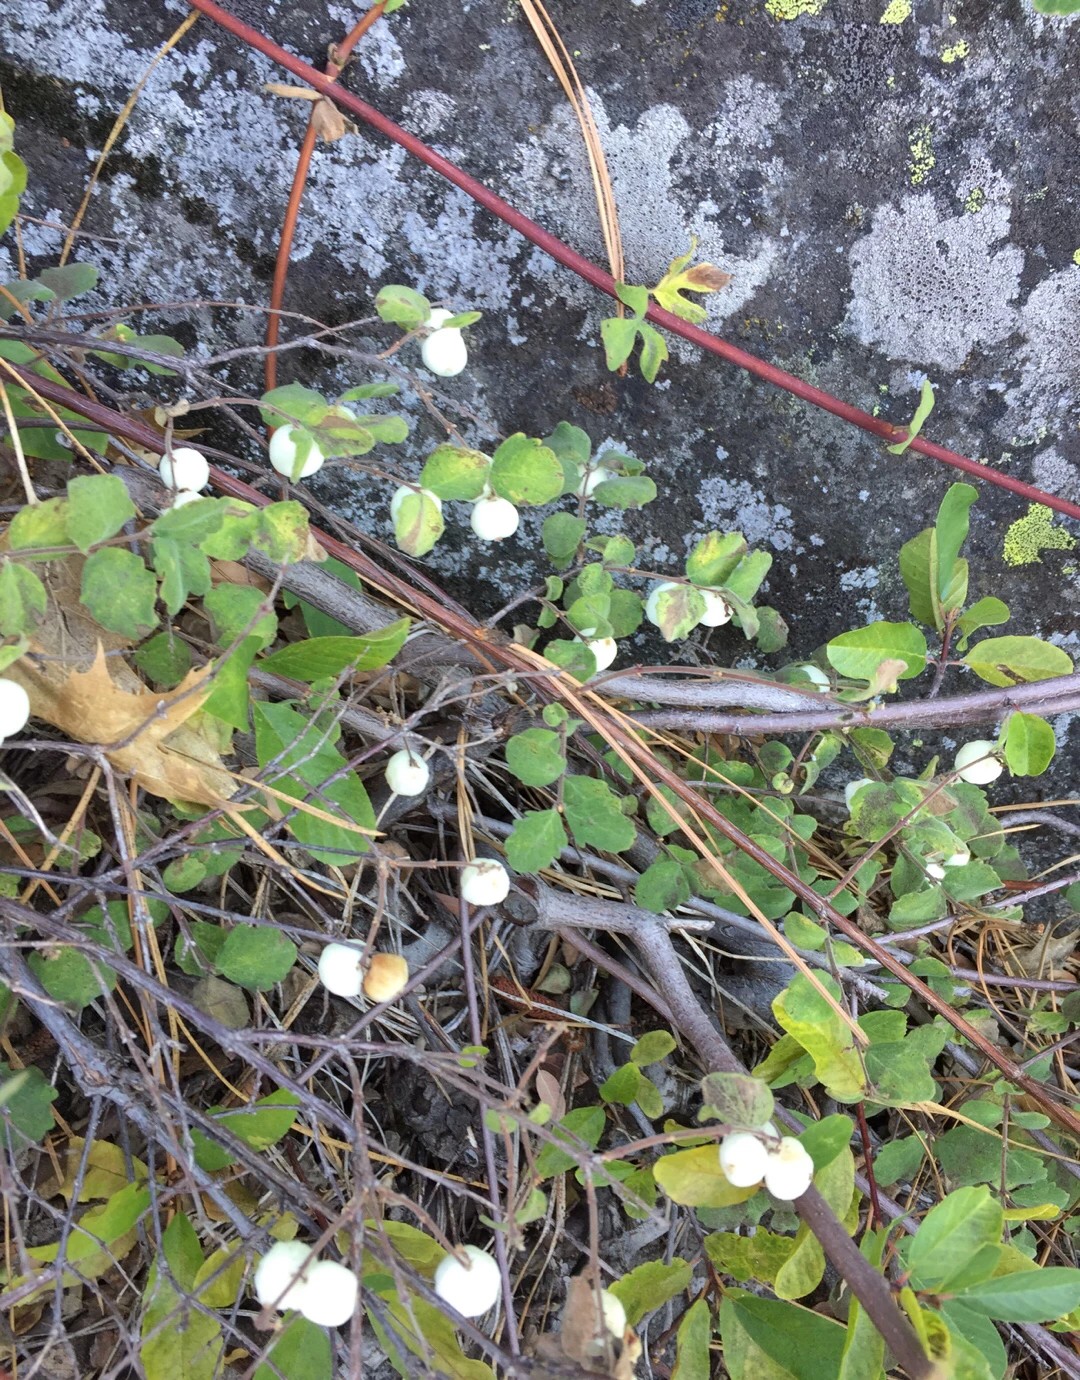 Native plant notes: Snowberry